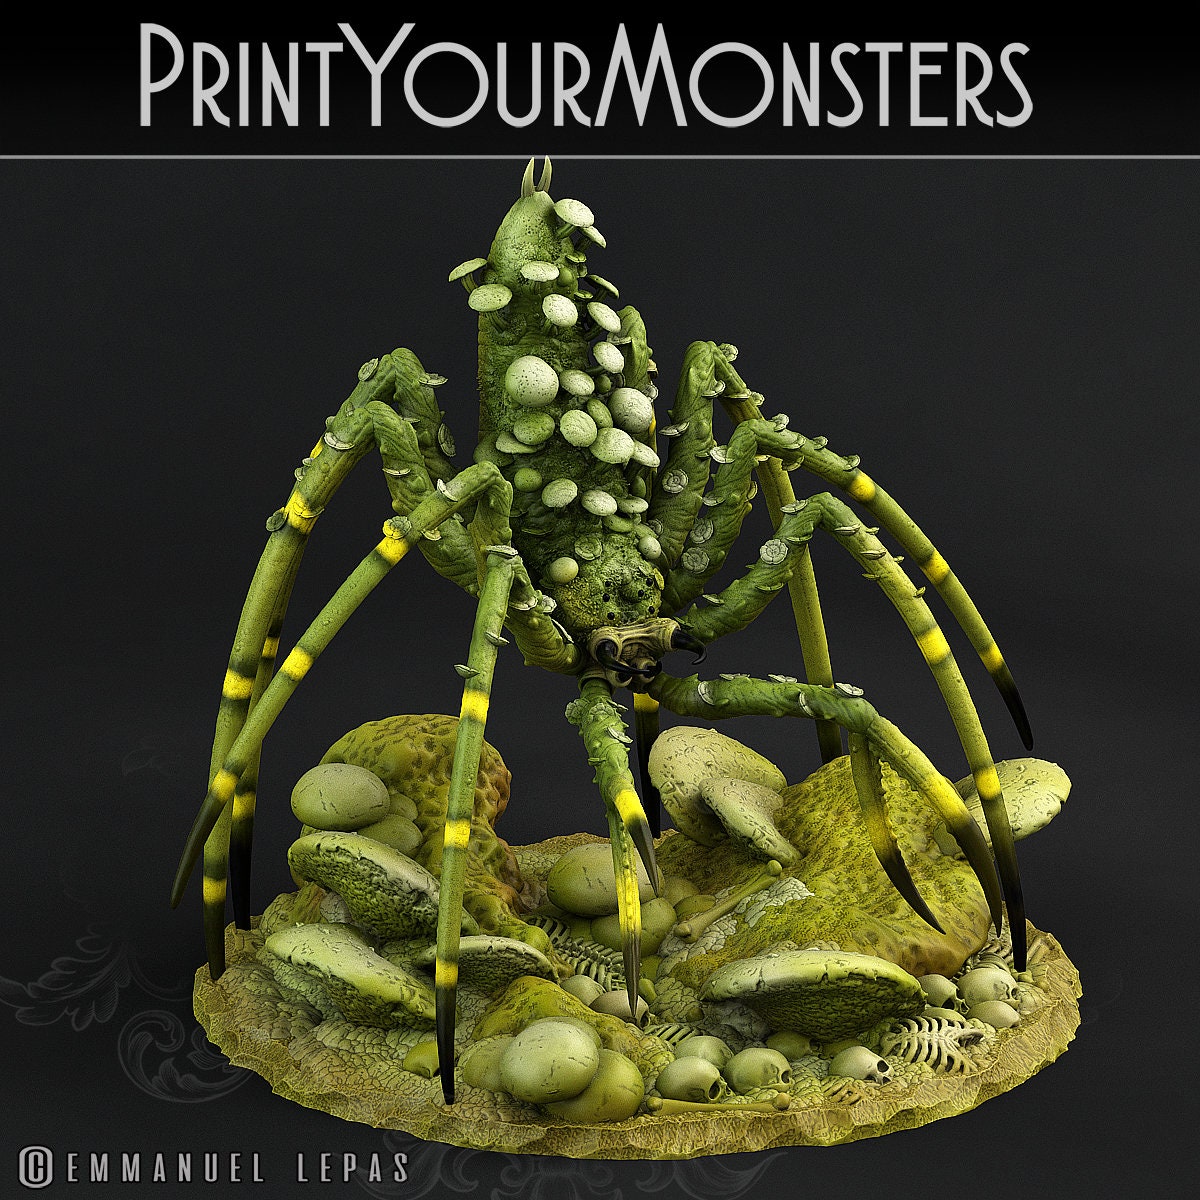 Dancing Toadstool Spider - Print Your Monsters 